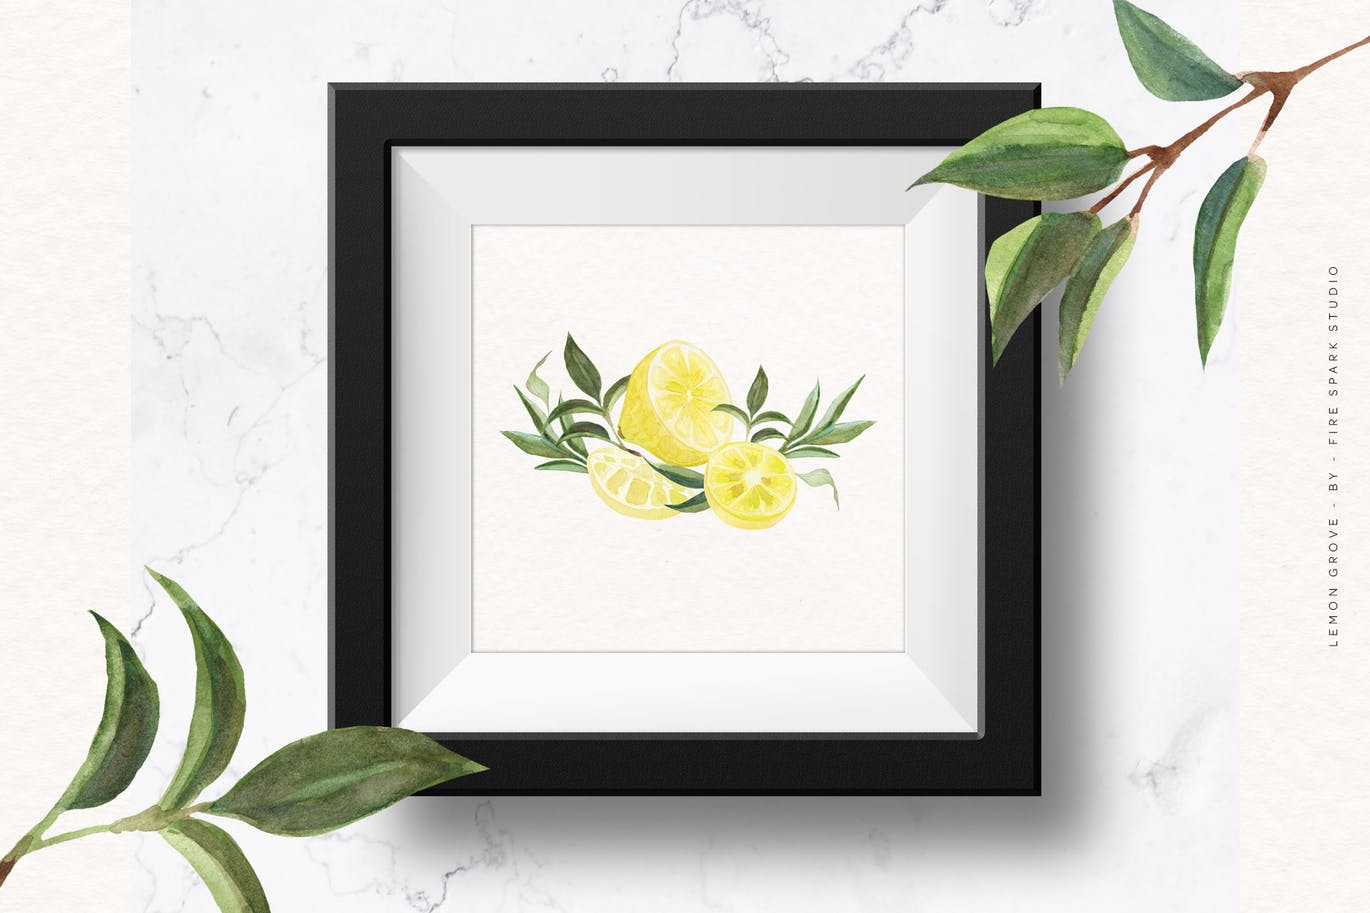 柠檬树水彩手绘矢量插画素材库精选素材 Lemon Grove Watercolor Illustrations插图(1)